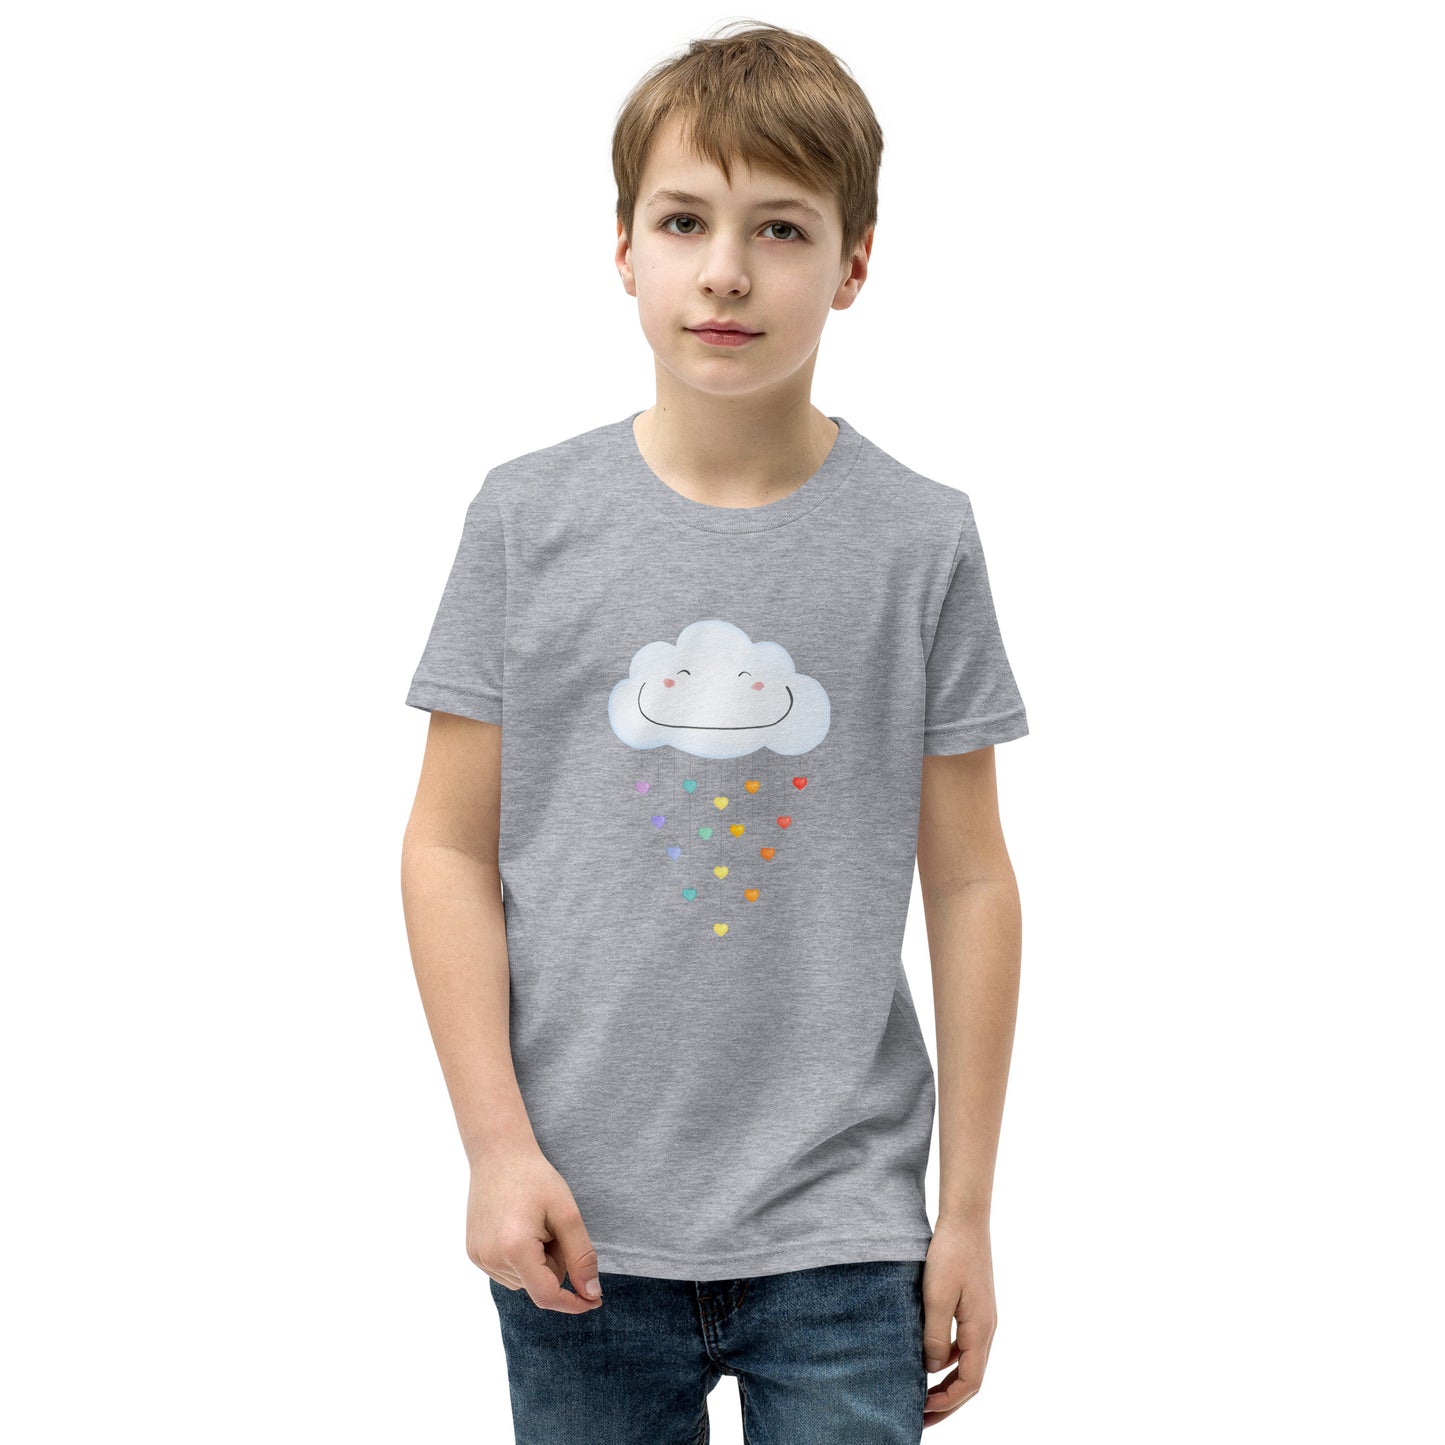 Youth Short Sleeve T-Shirt "Happy rainbow cloud"